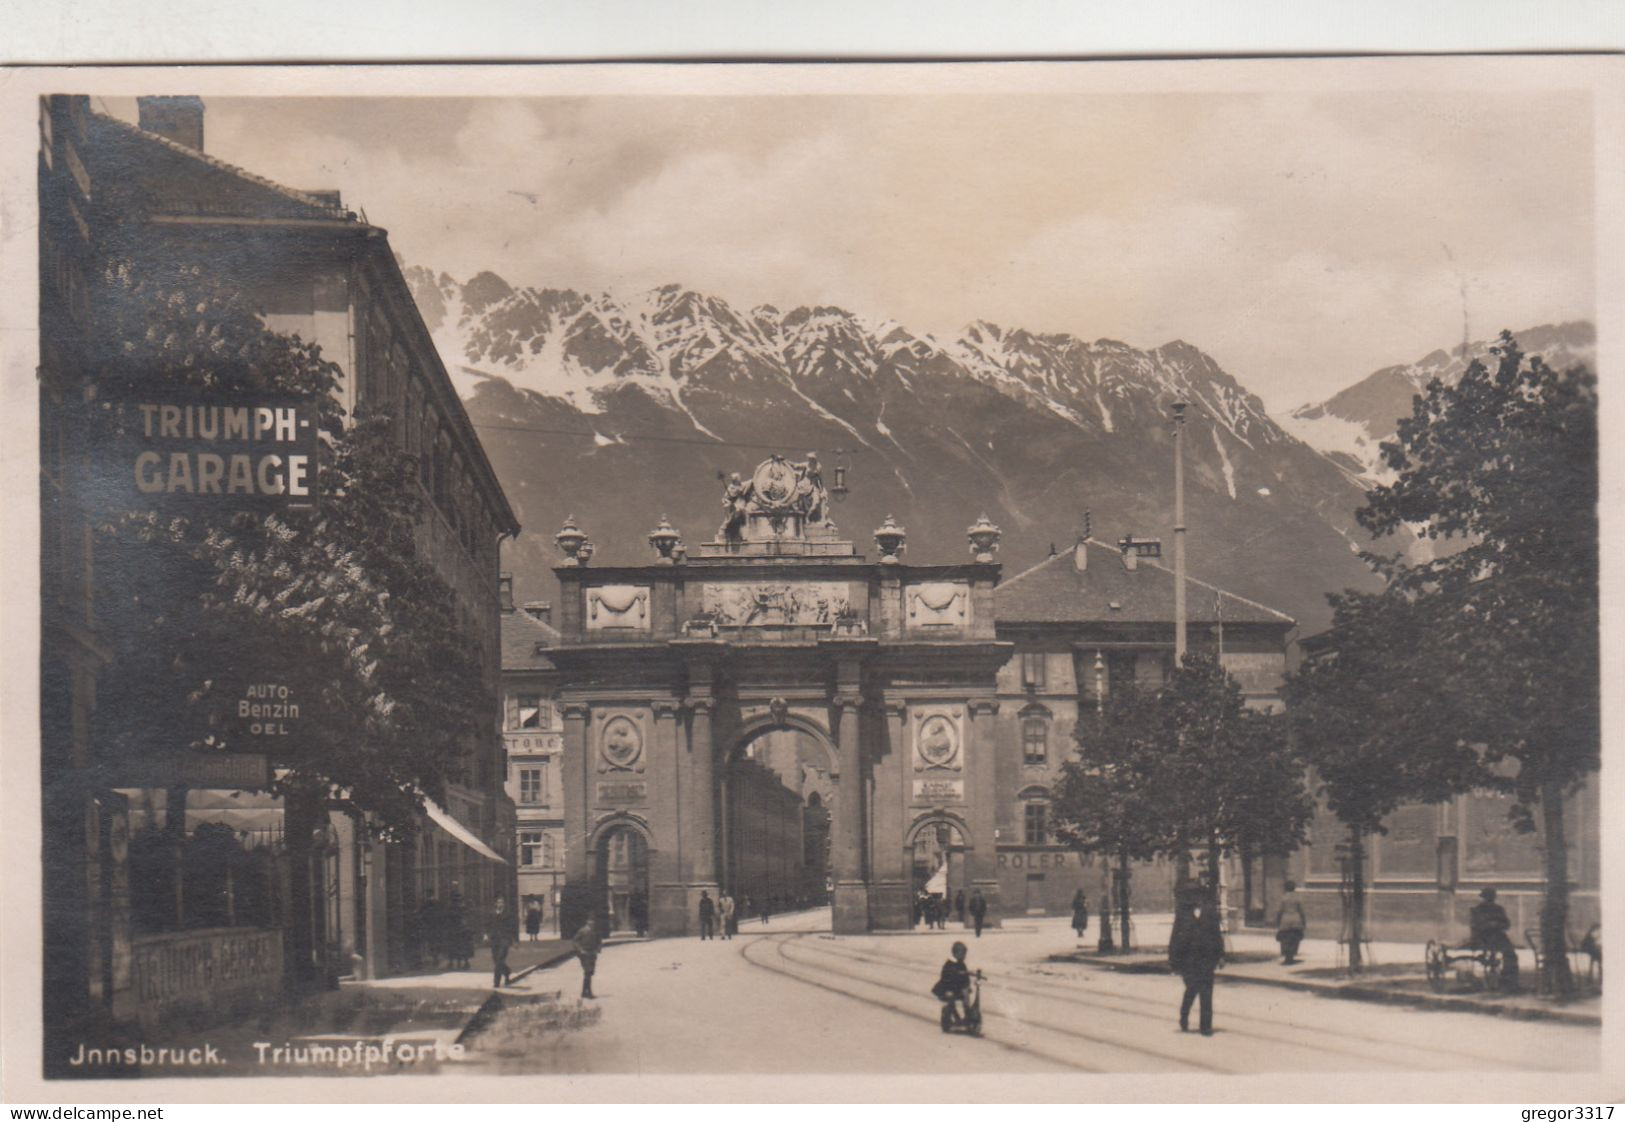 D1293) INNSBRUCK -  Triumpfpforte - Tafel Triumph Garage U. Personen - Tolle Alte FOTO AK 1927 - Innsbruck